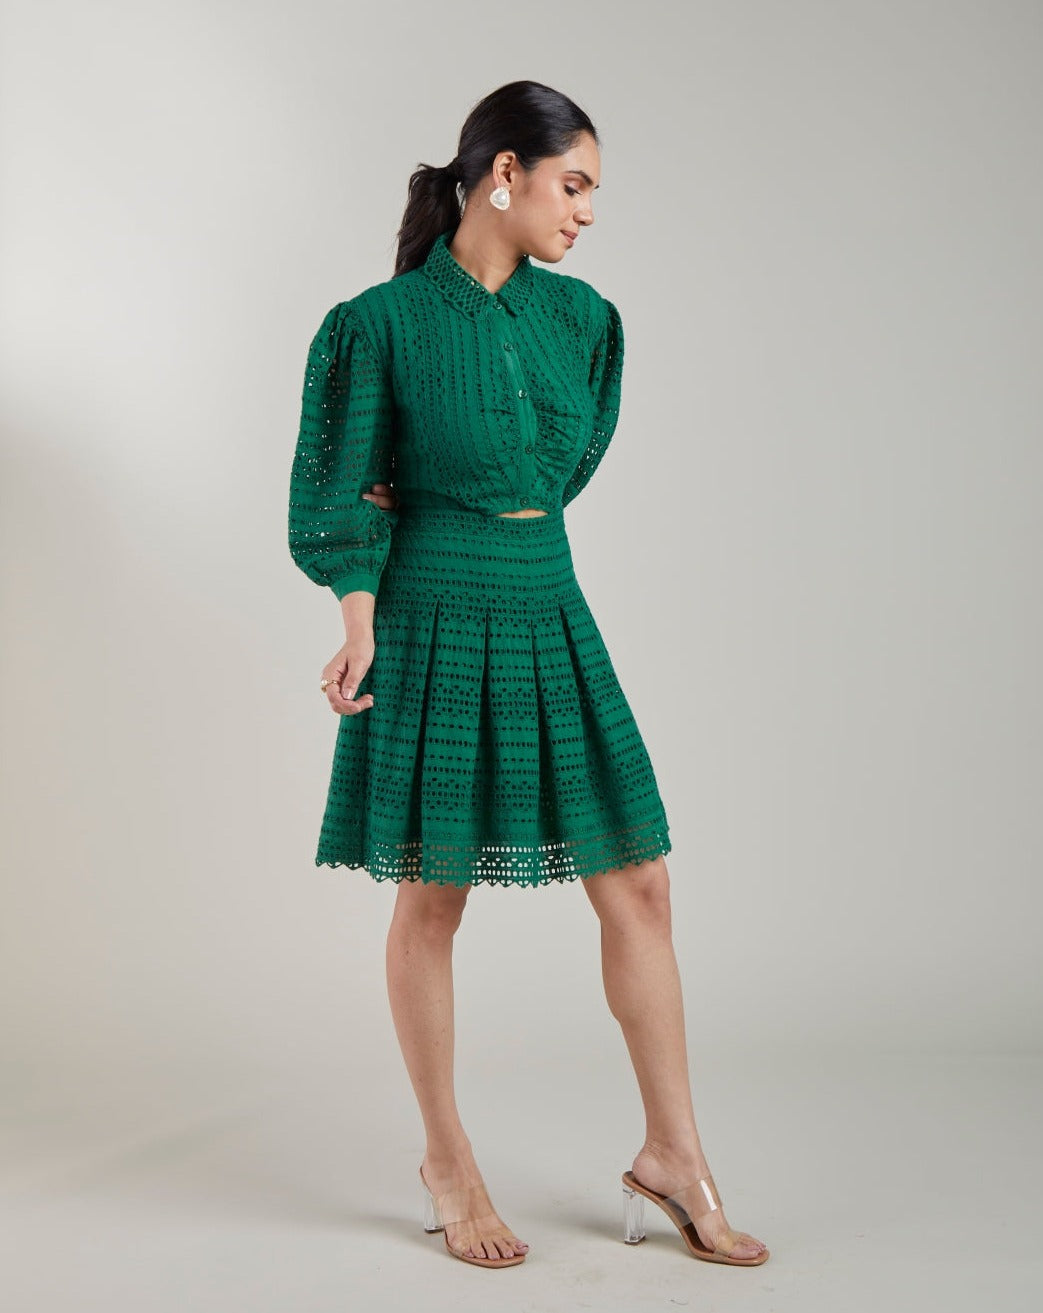 Thea Green Dress